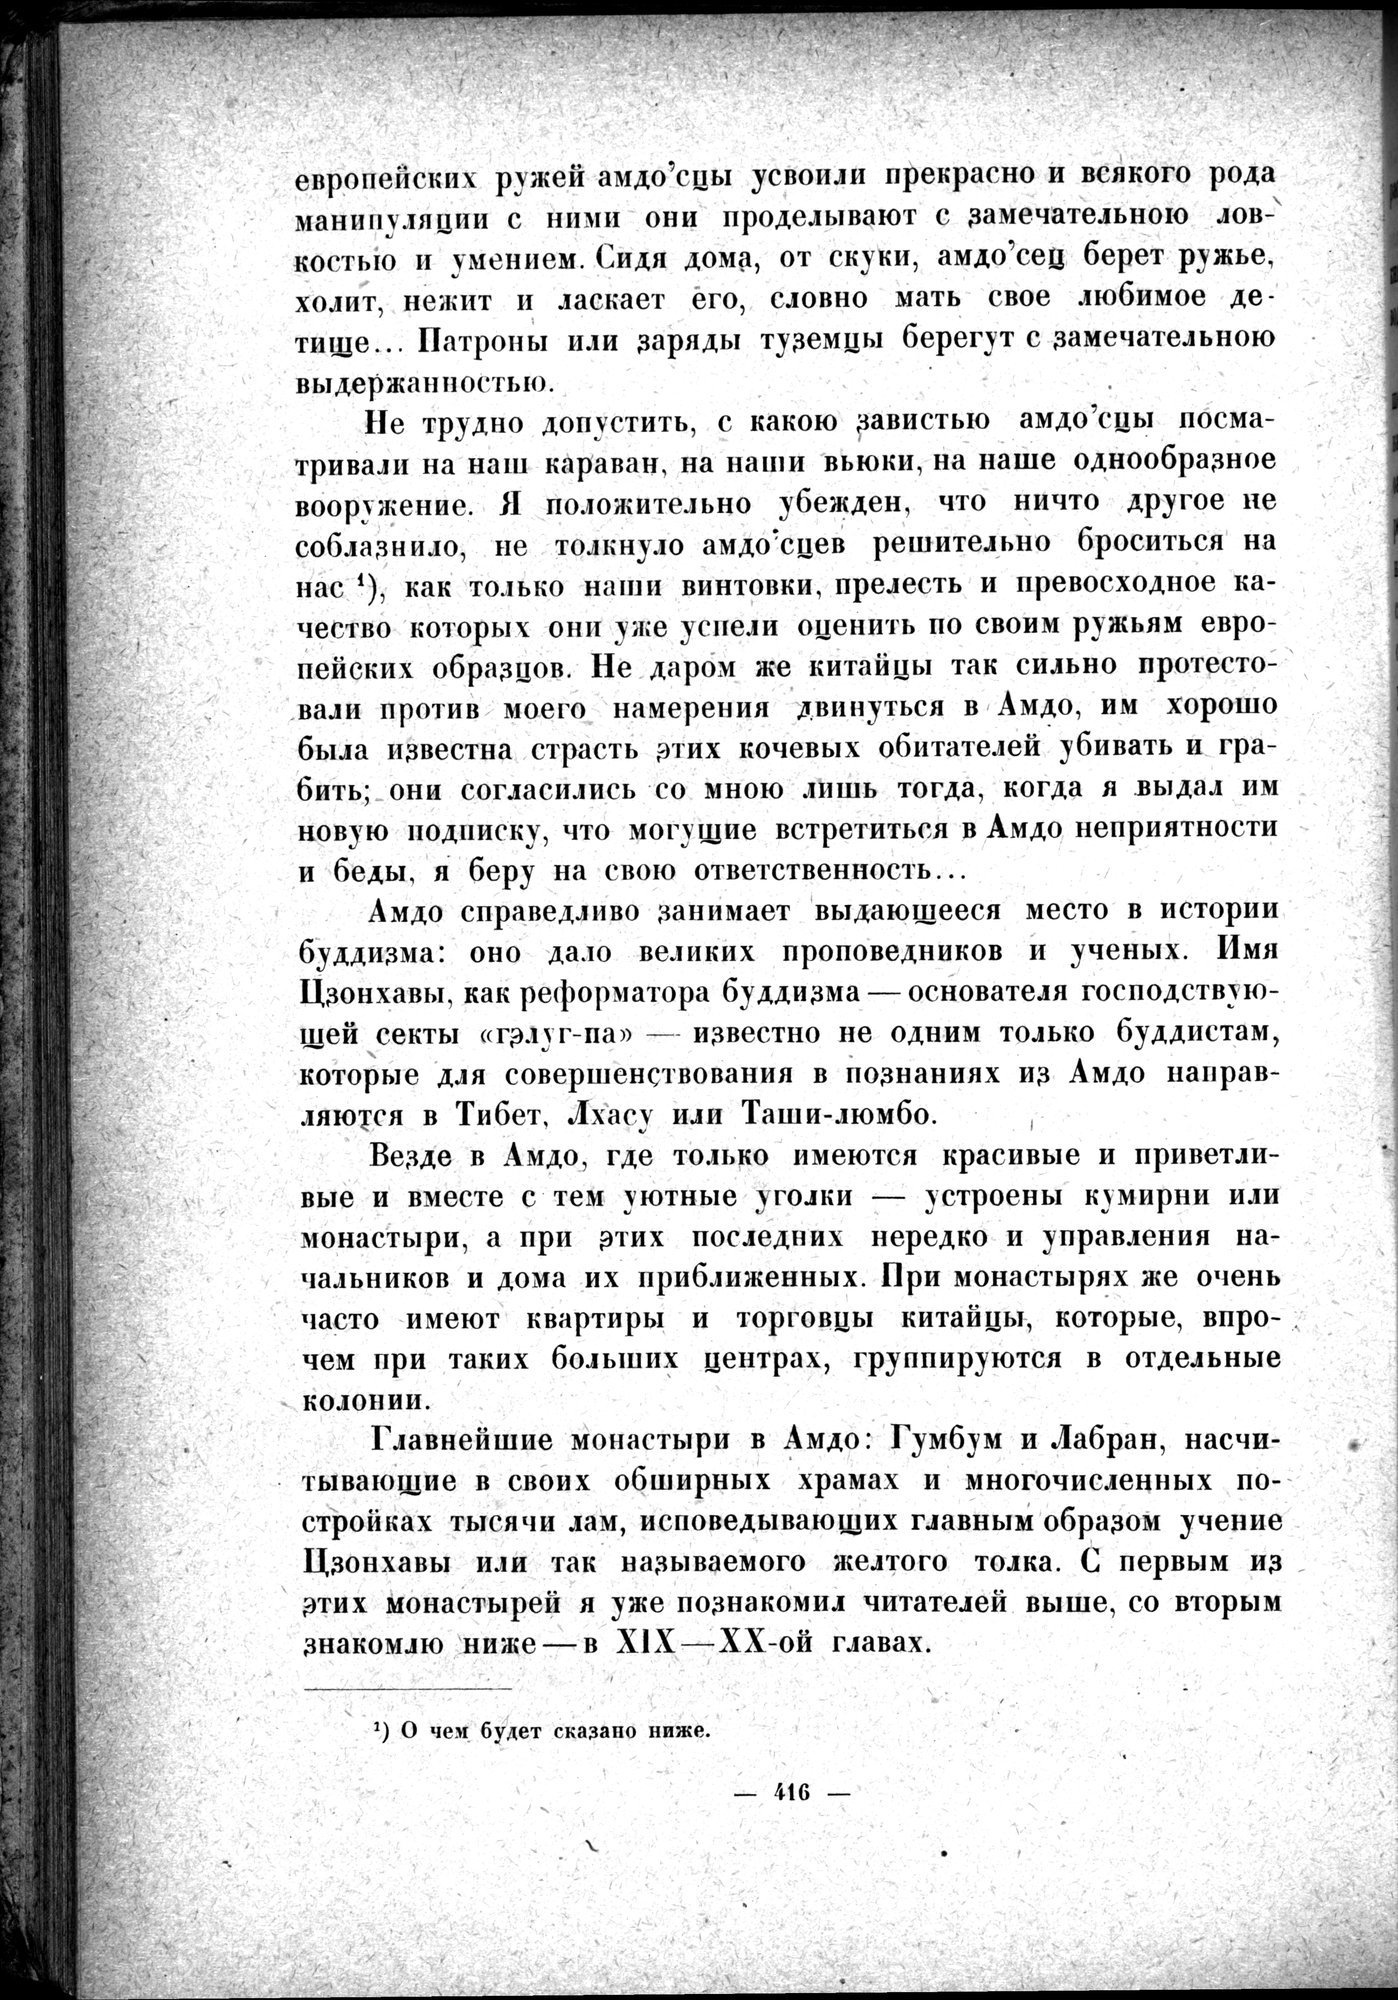 Mongoliya i Amdo i mertby gorod Khara-Khoto : vol.1 / Page 478 (Grayscale High Resolution Image)